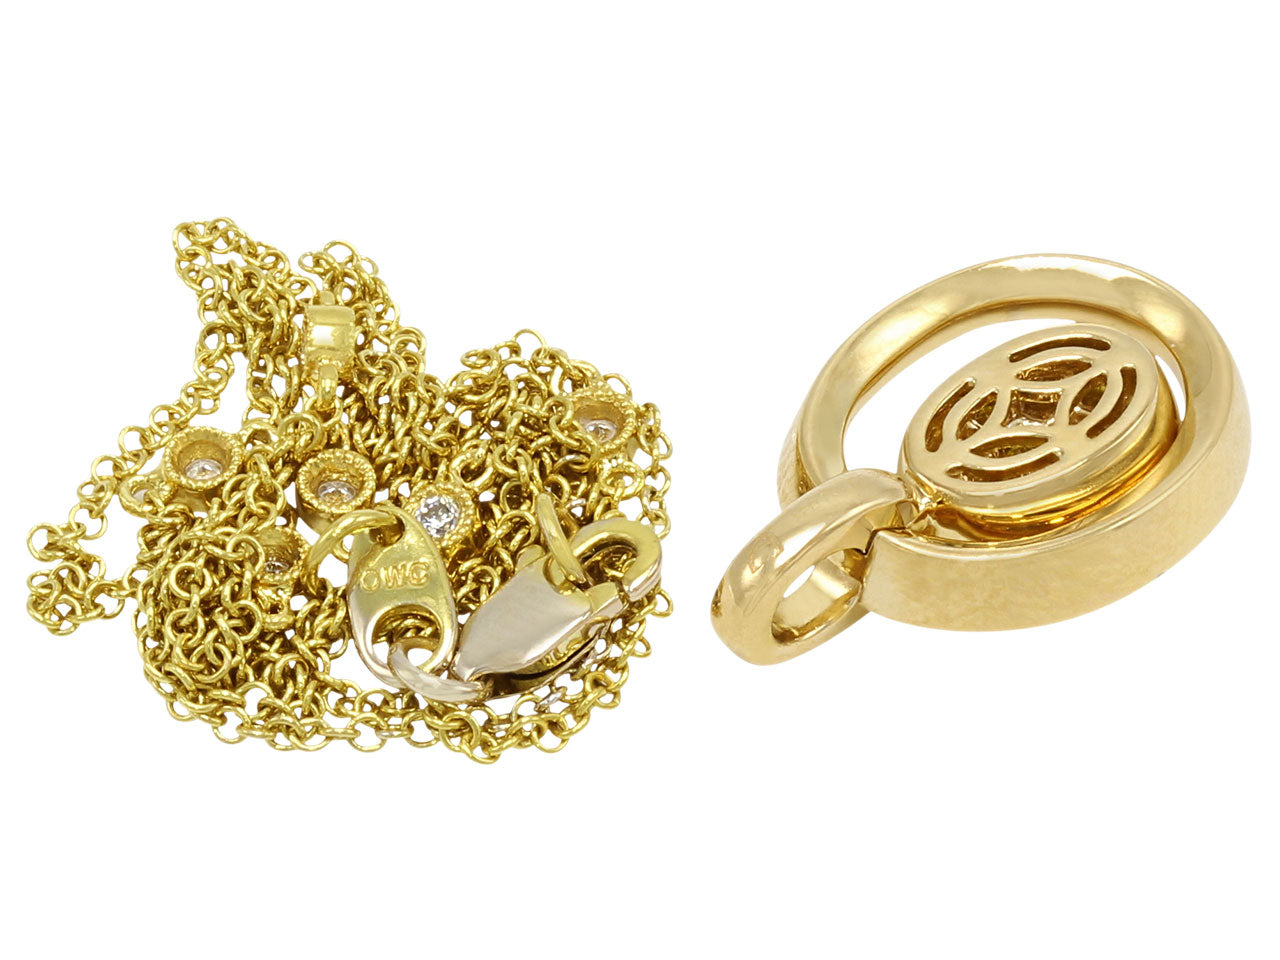 Alan Friedman Yellow Diamond Pendant Necklace in 18K Gold